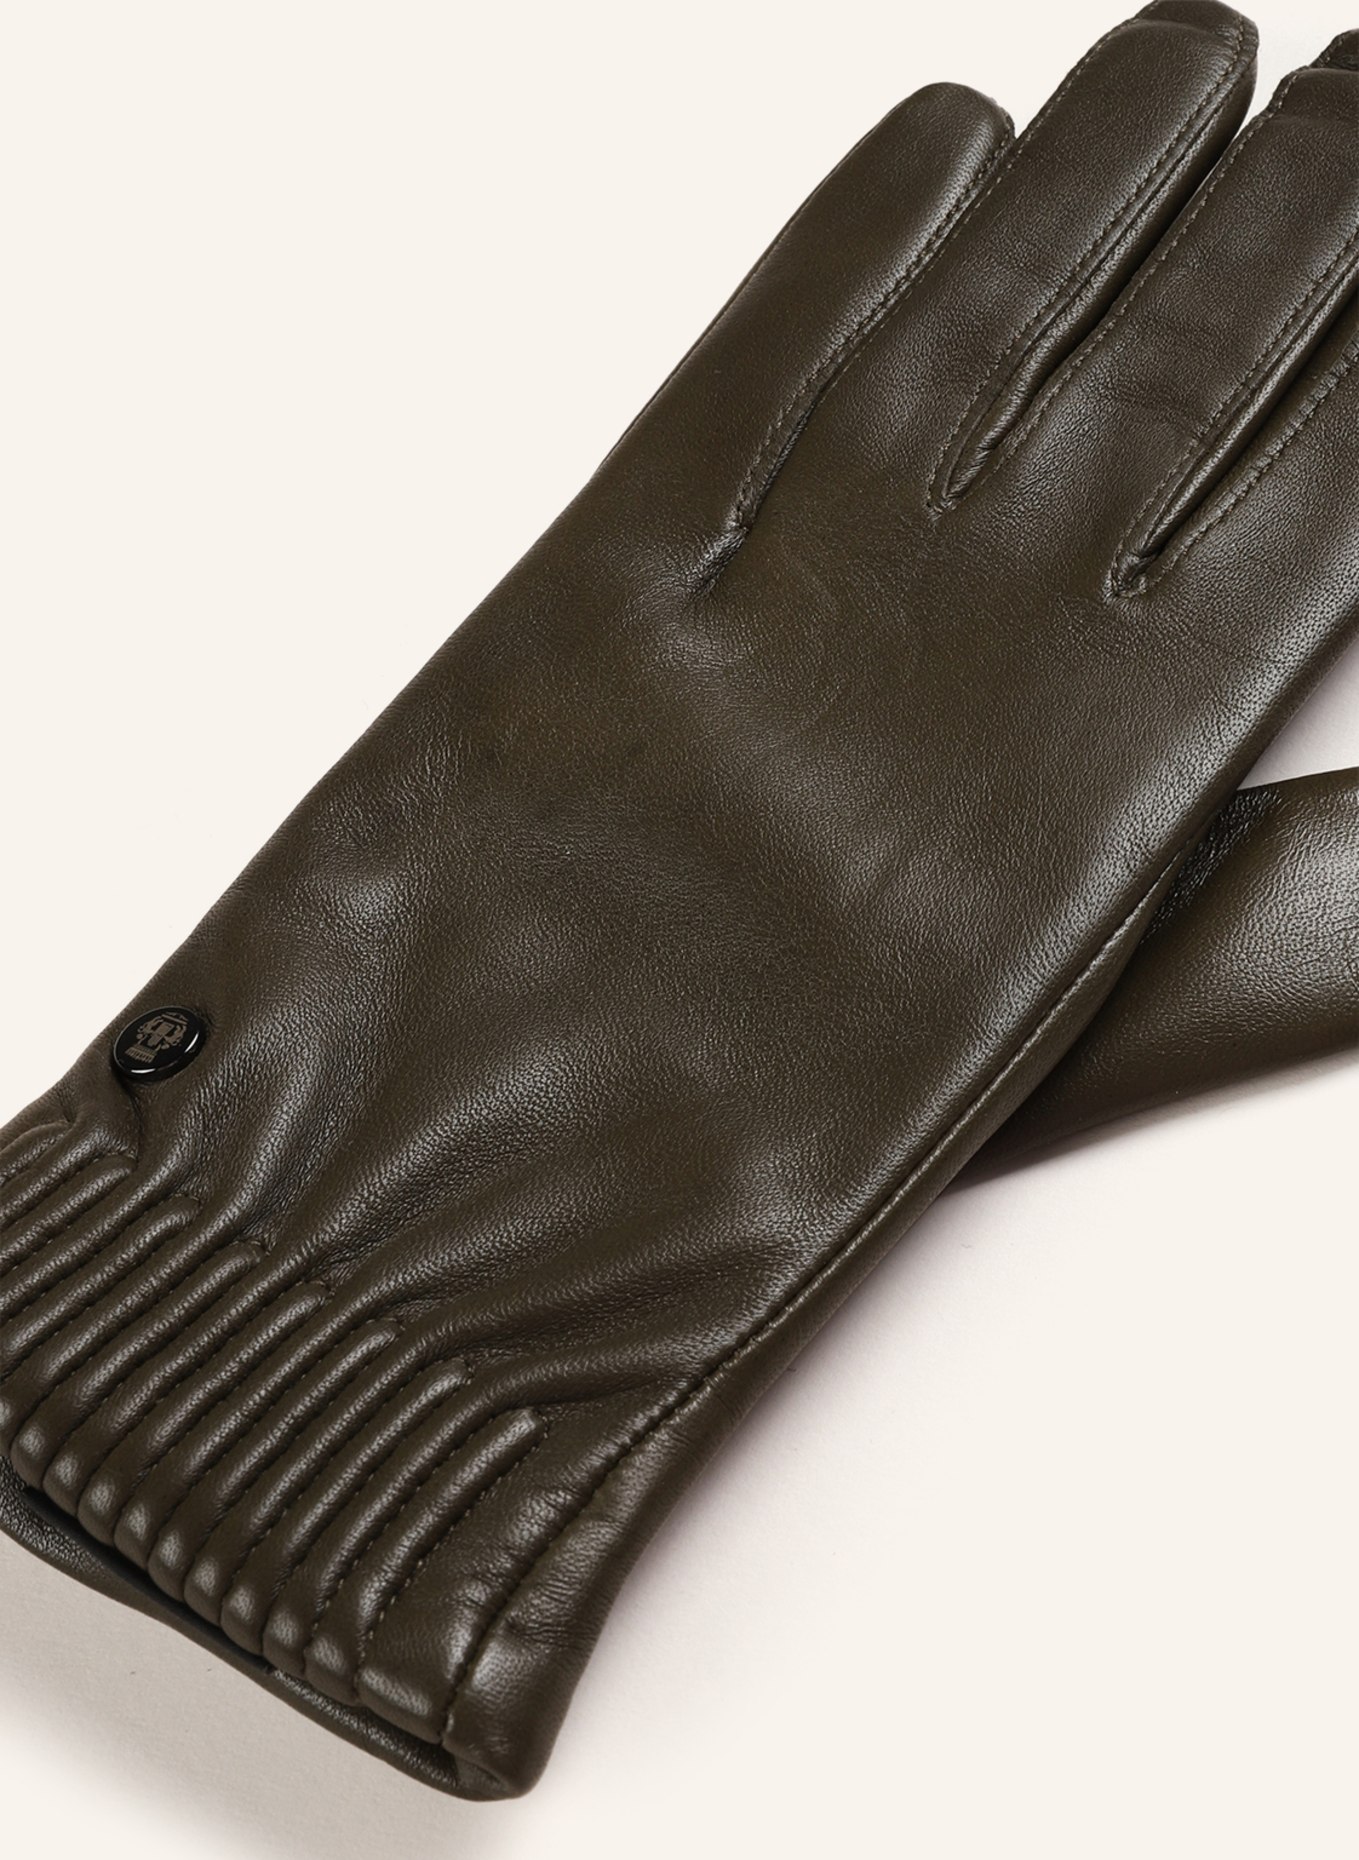 ROECKL Lederhandschuhe ARIZONA mit Touchscreen-Funktion, Farbe: KHAKI (Bild 2)